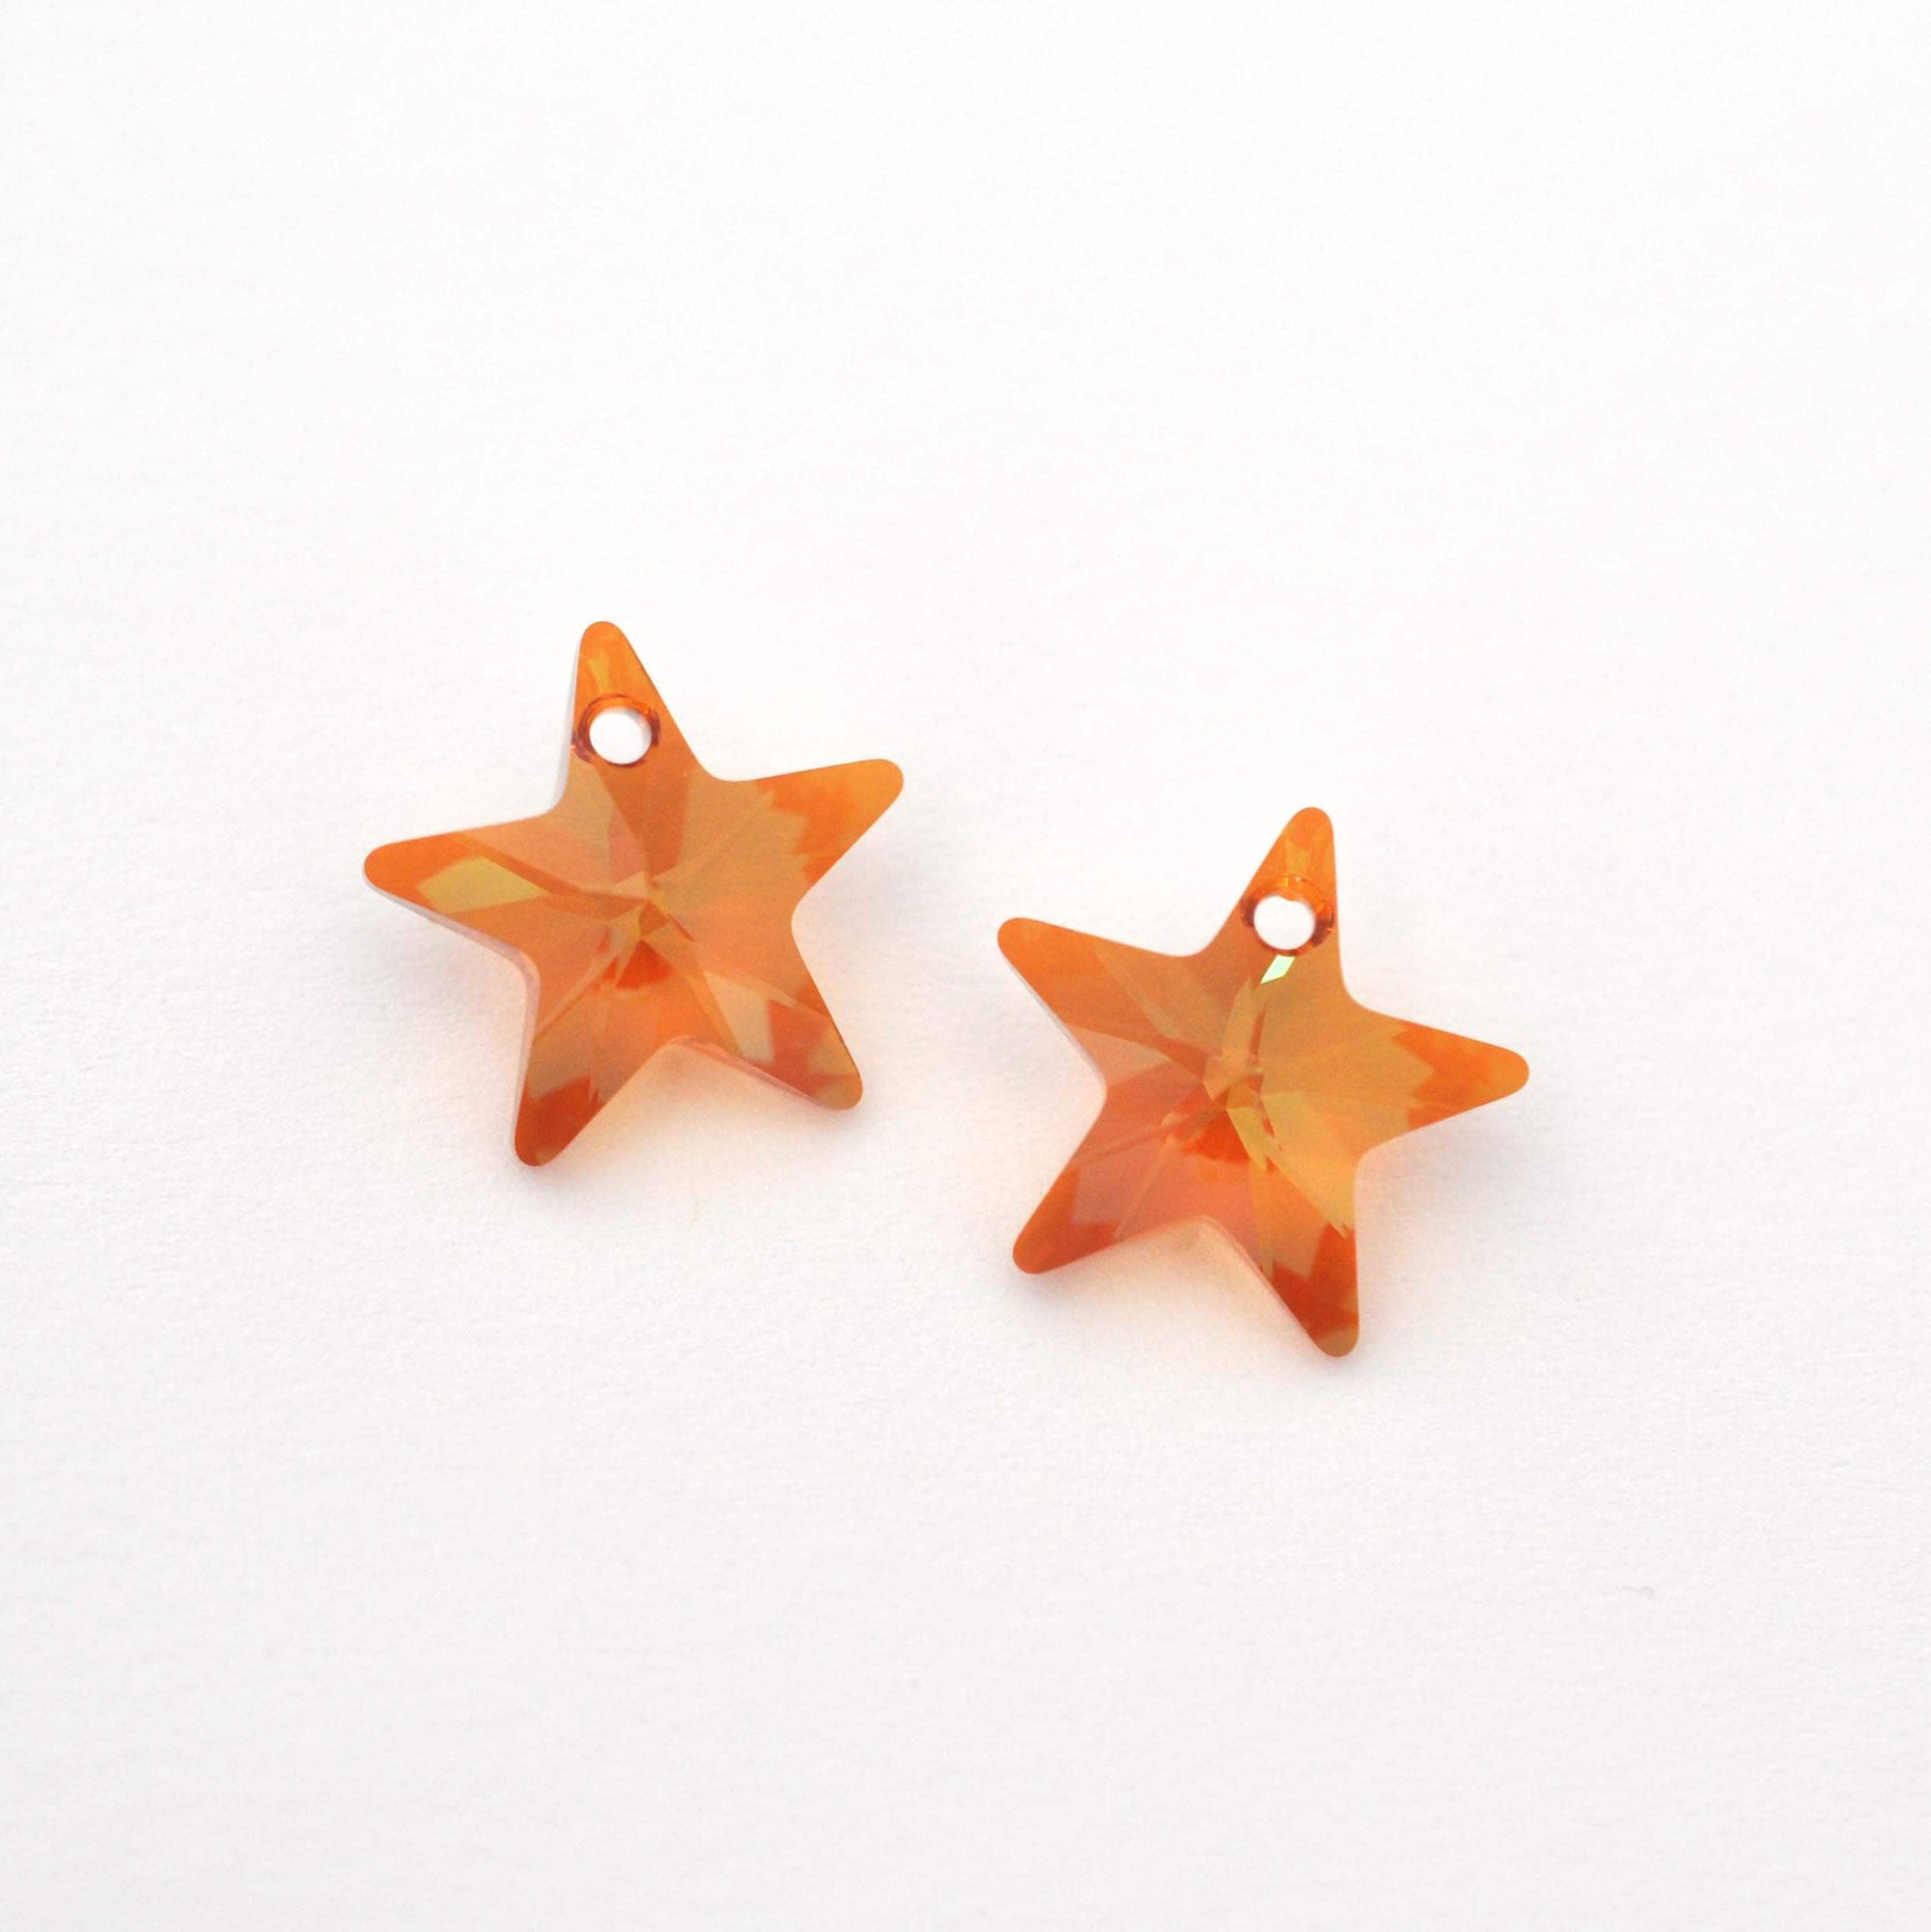 Copper 16mm Sparkle Star Pendant 6715 Barton Crystal - 1 Pair (2 Pieces)